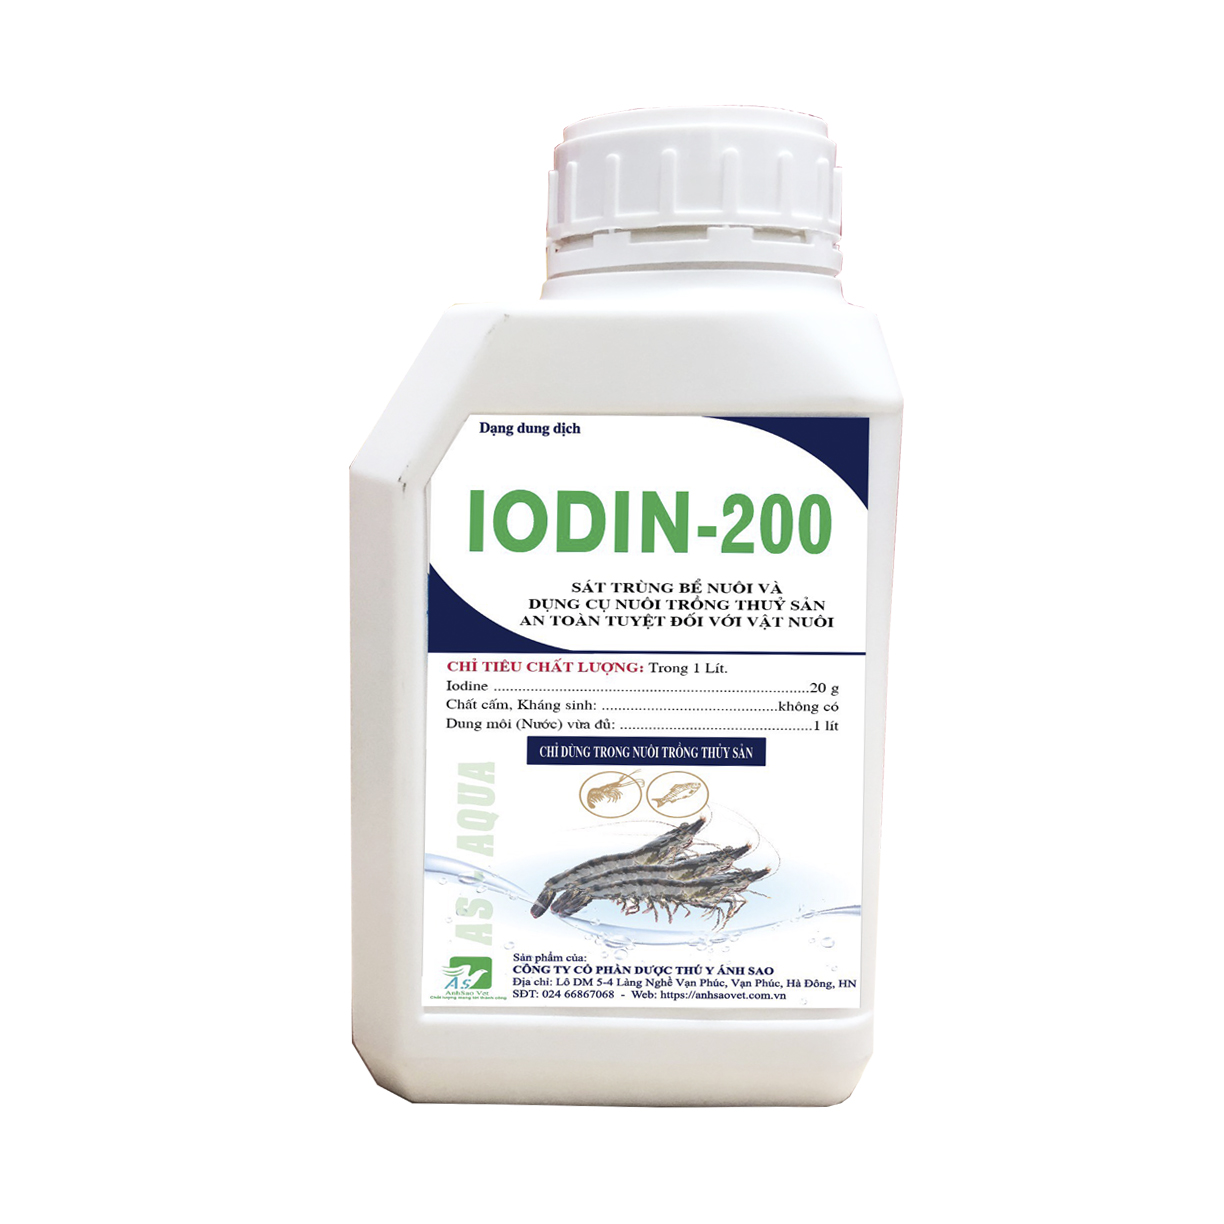 IODIN-200